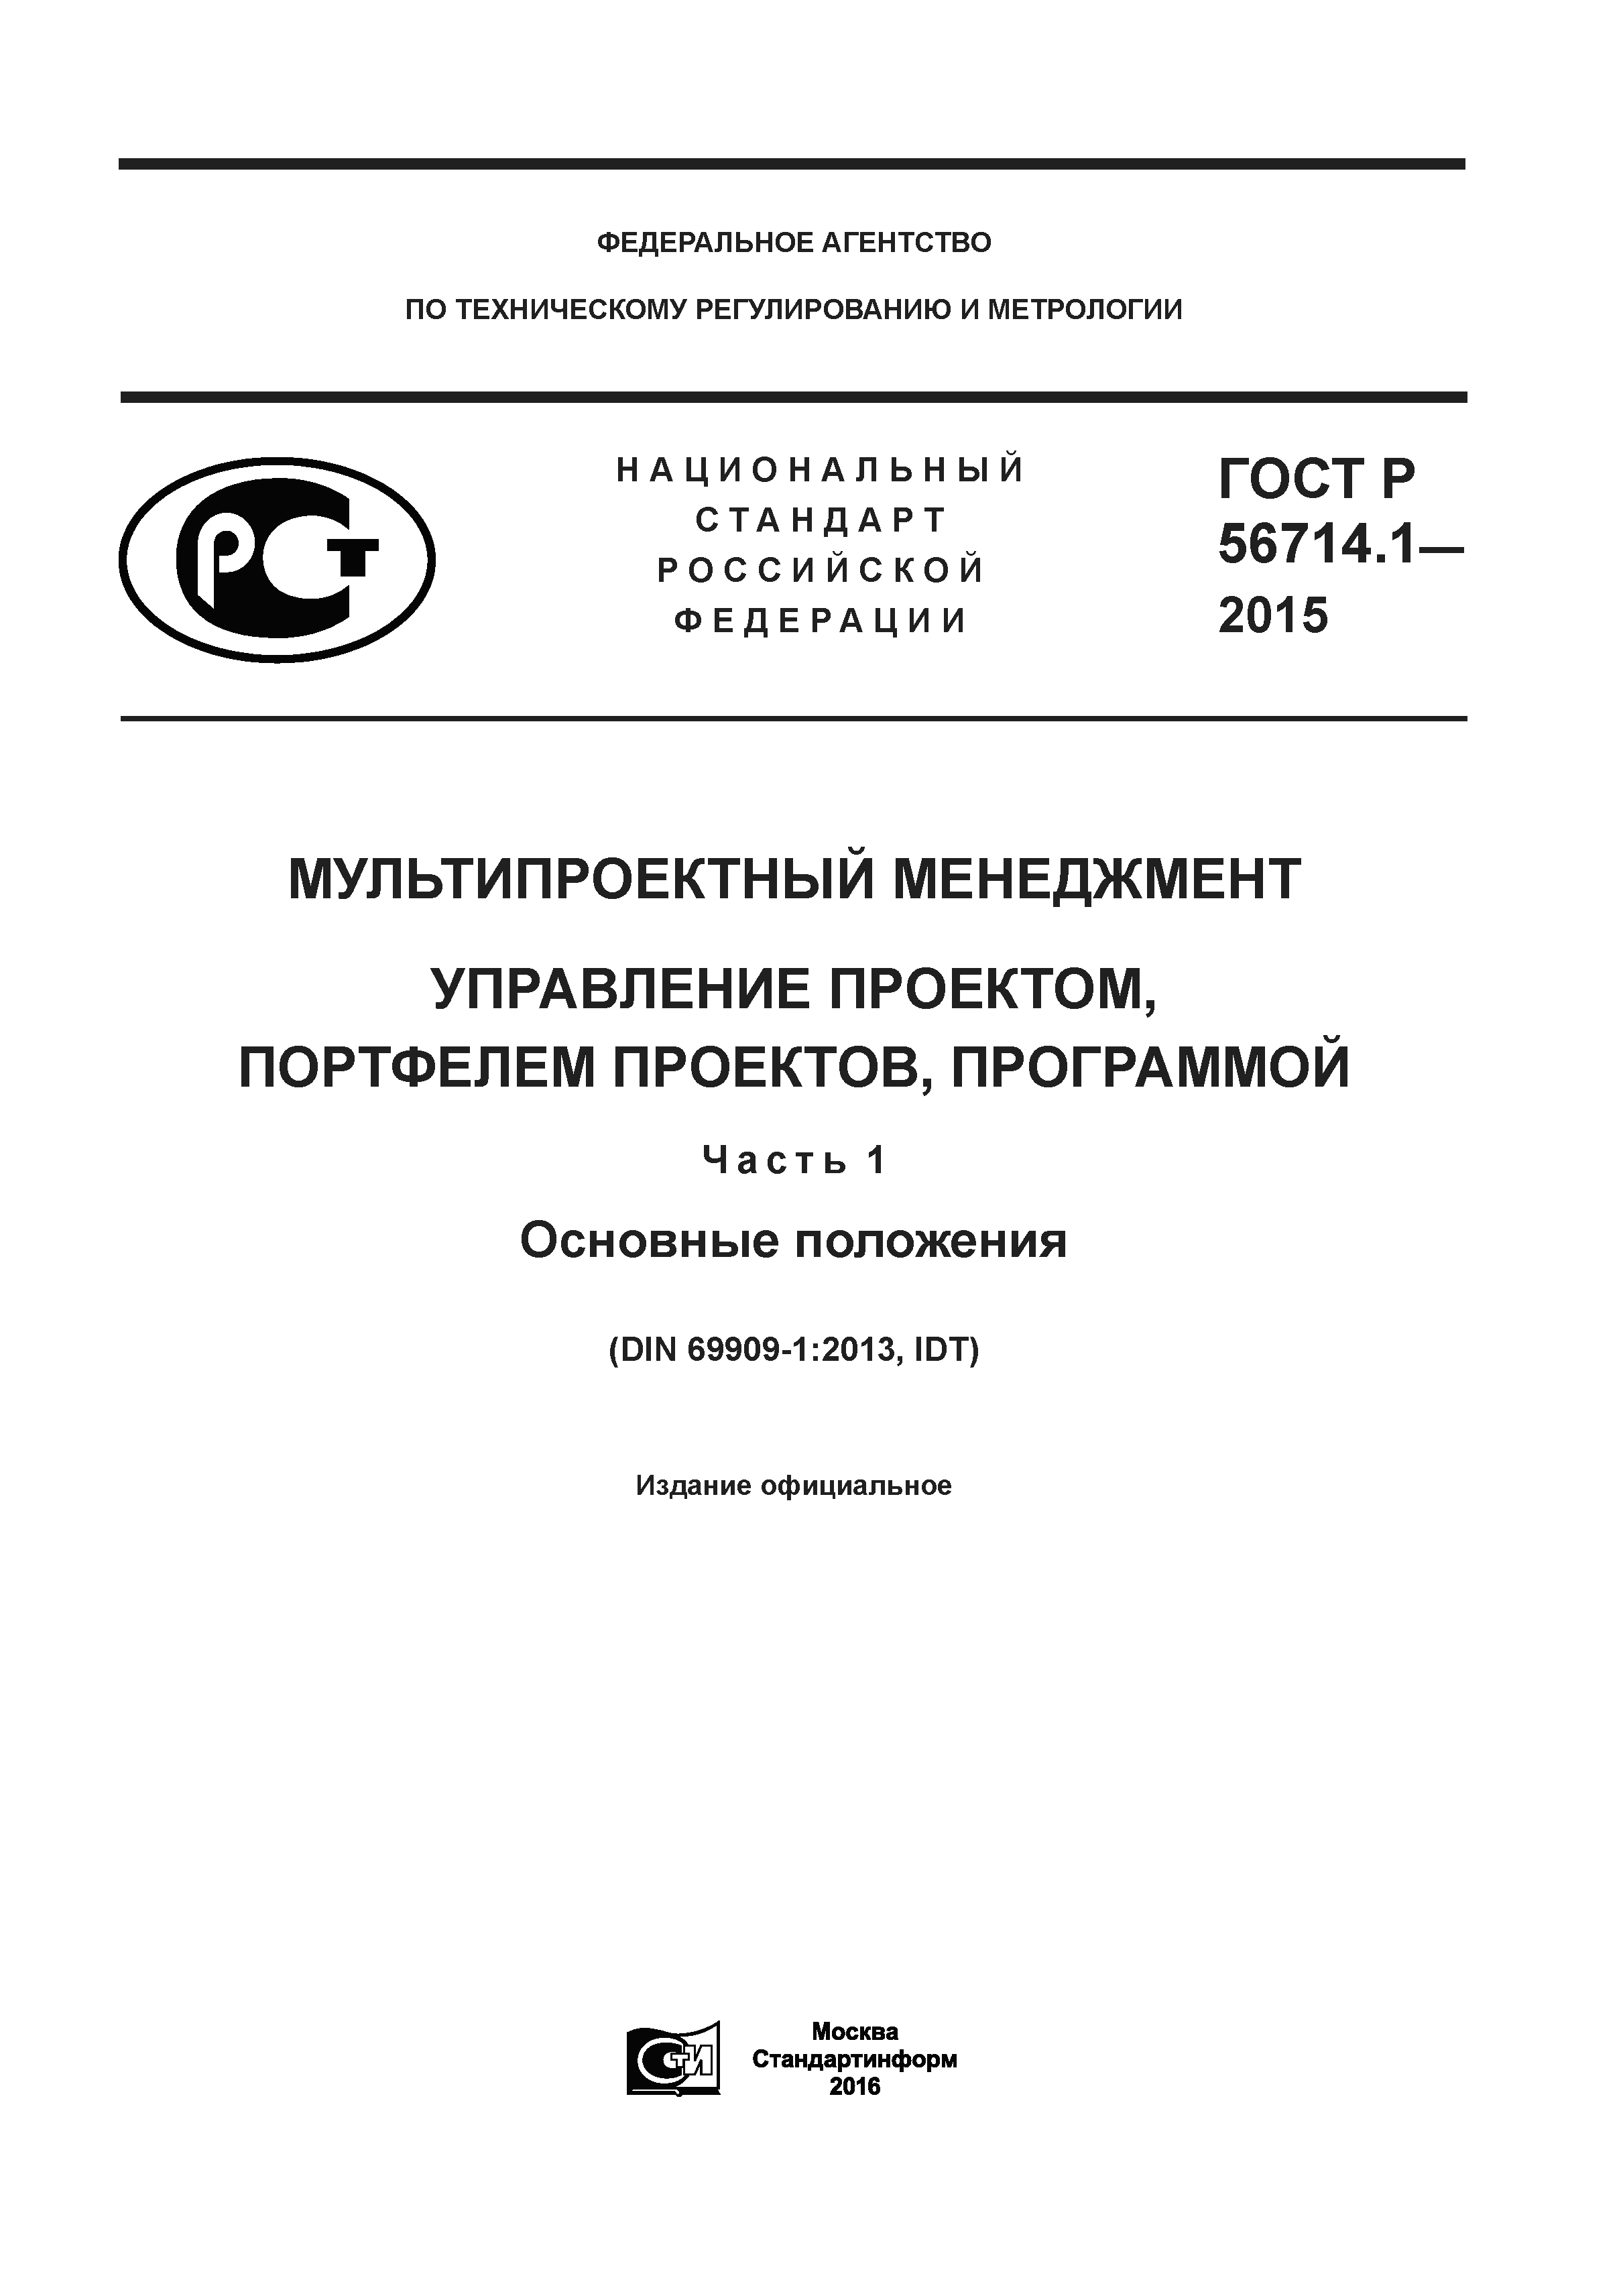 ГОСТ Р 56714.1-2015